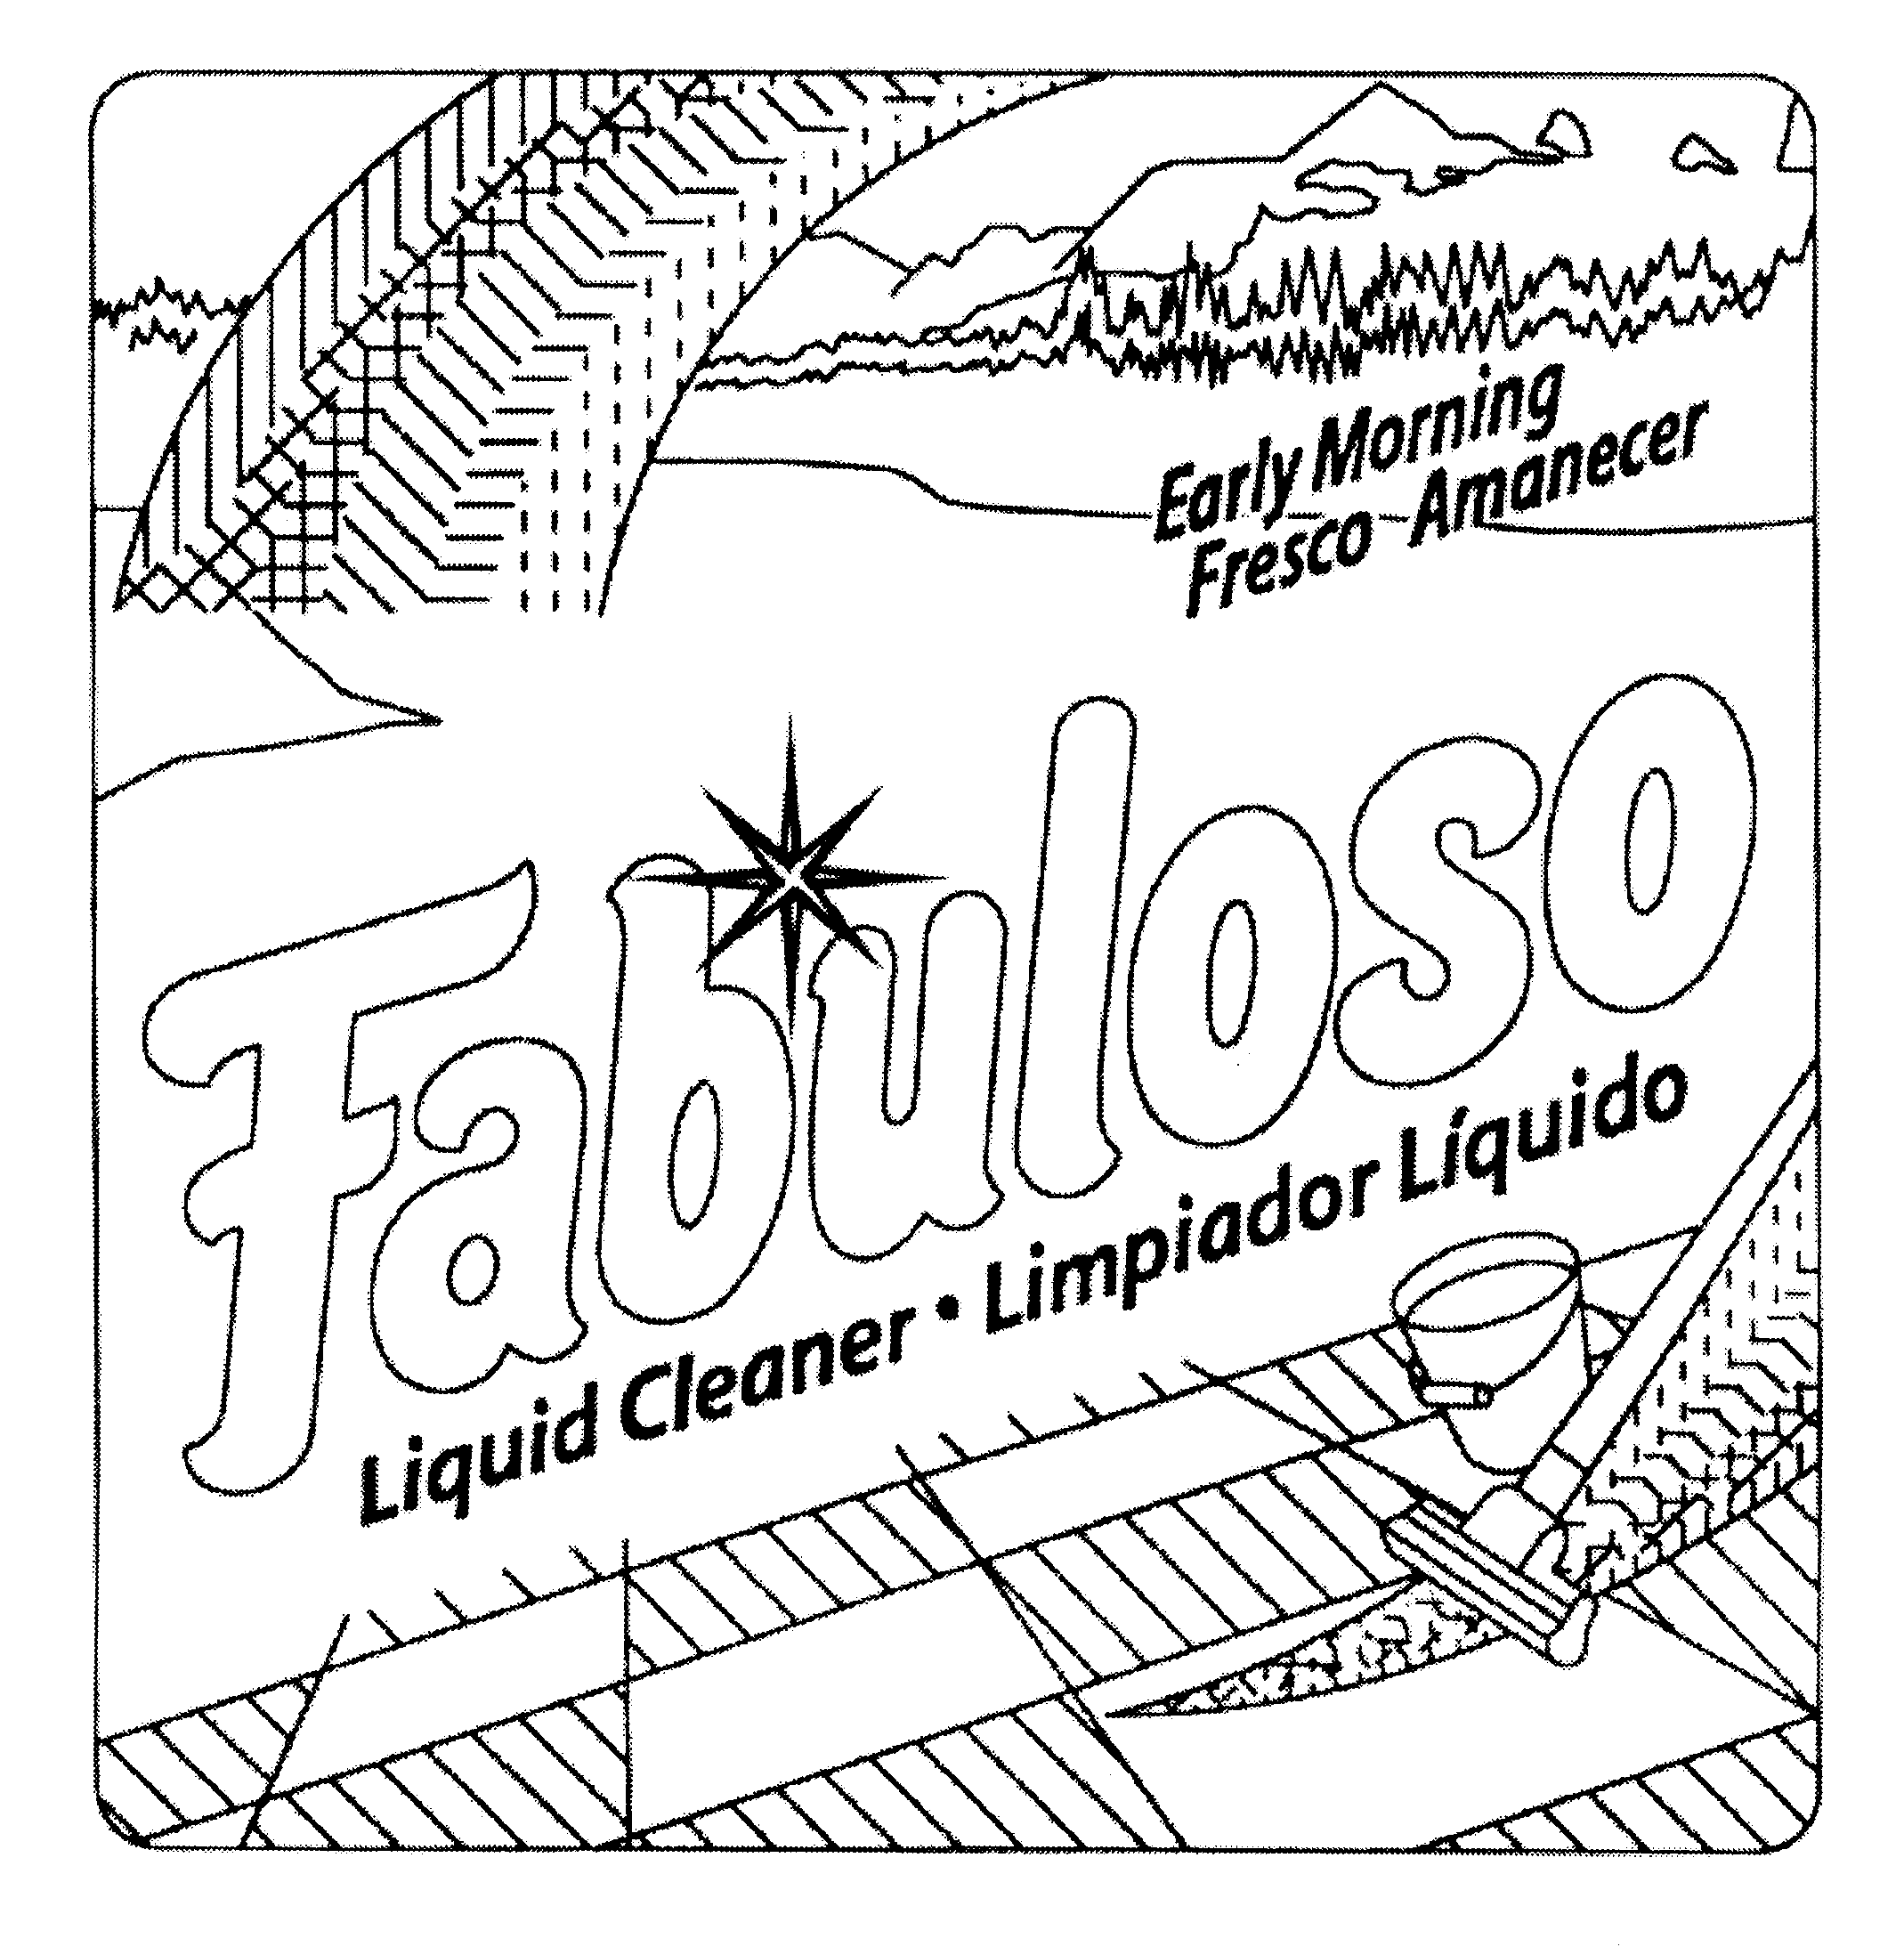  FABULOSO EARLY MORNING FRESCO AMANECER LIQUID CLEANER LIMPIADOR LIQUIDO